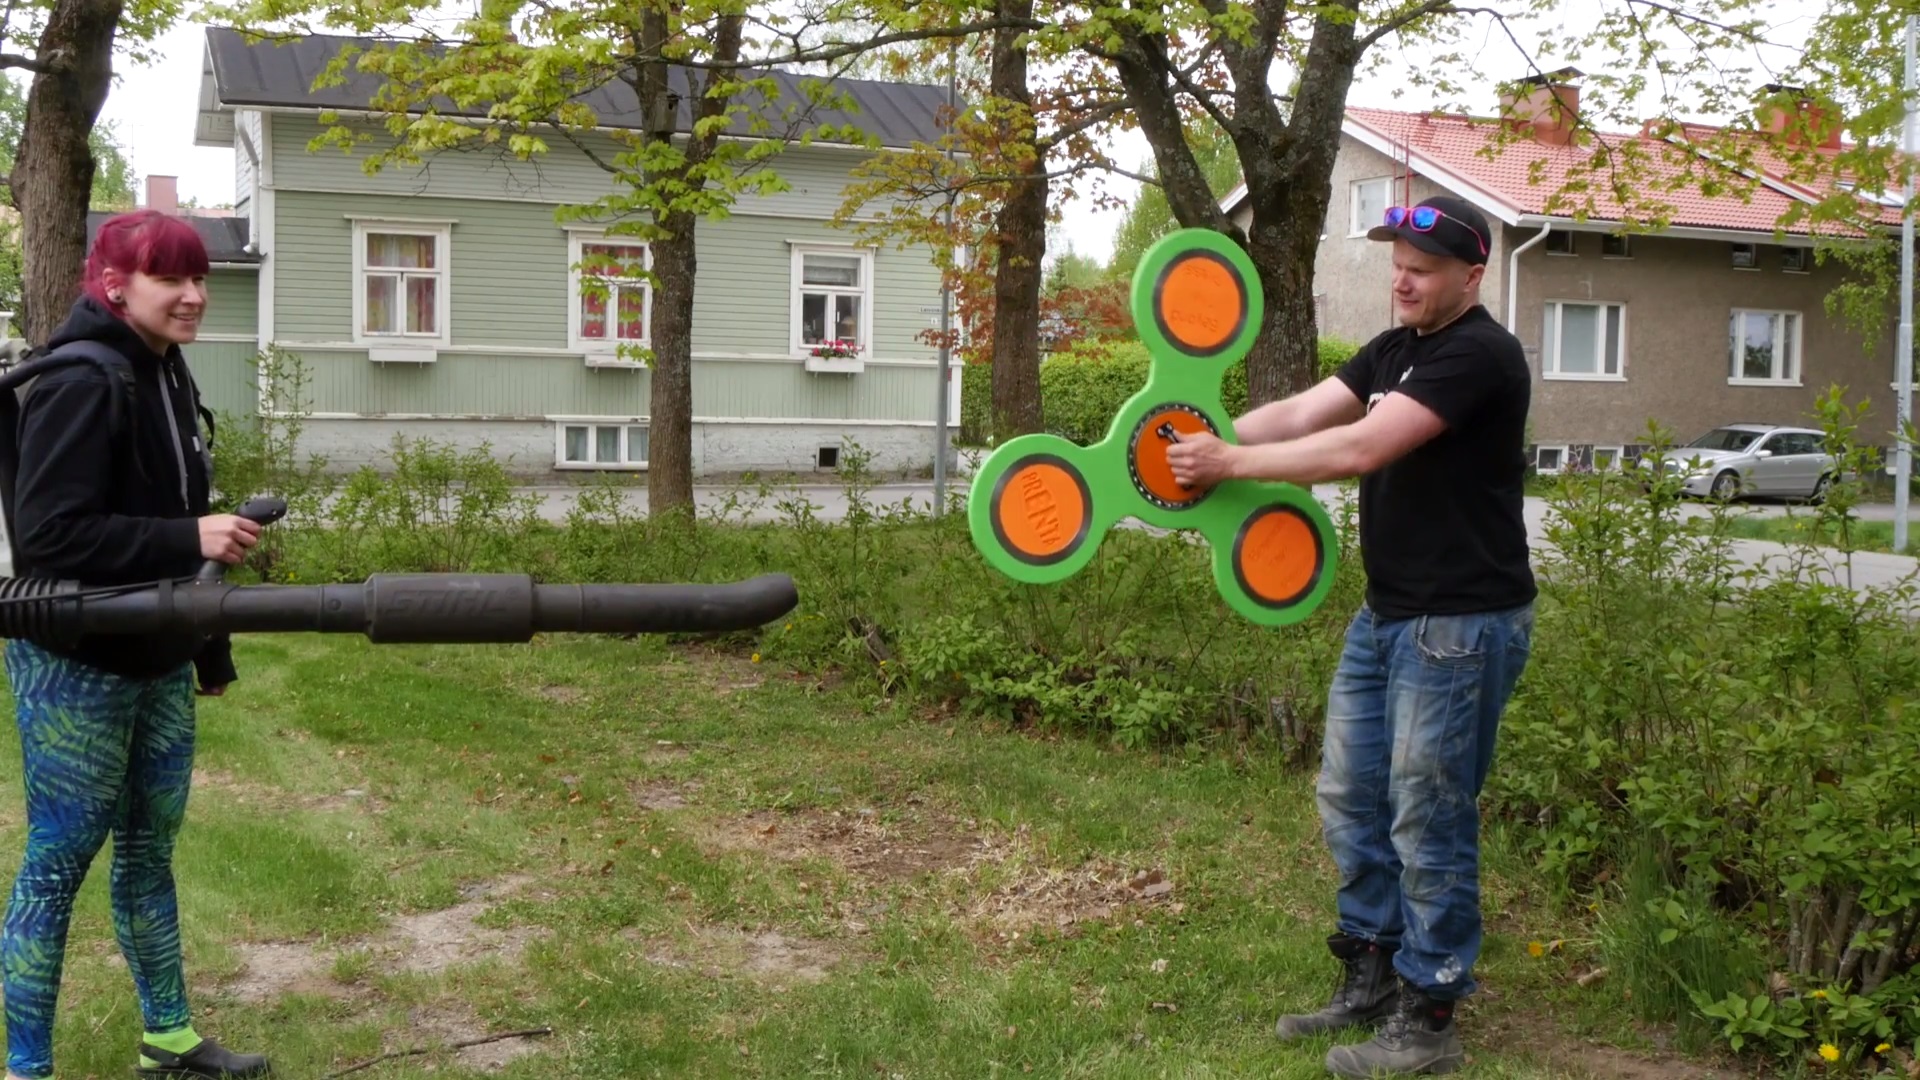 Man Makes World's Largest Fidget Spinner